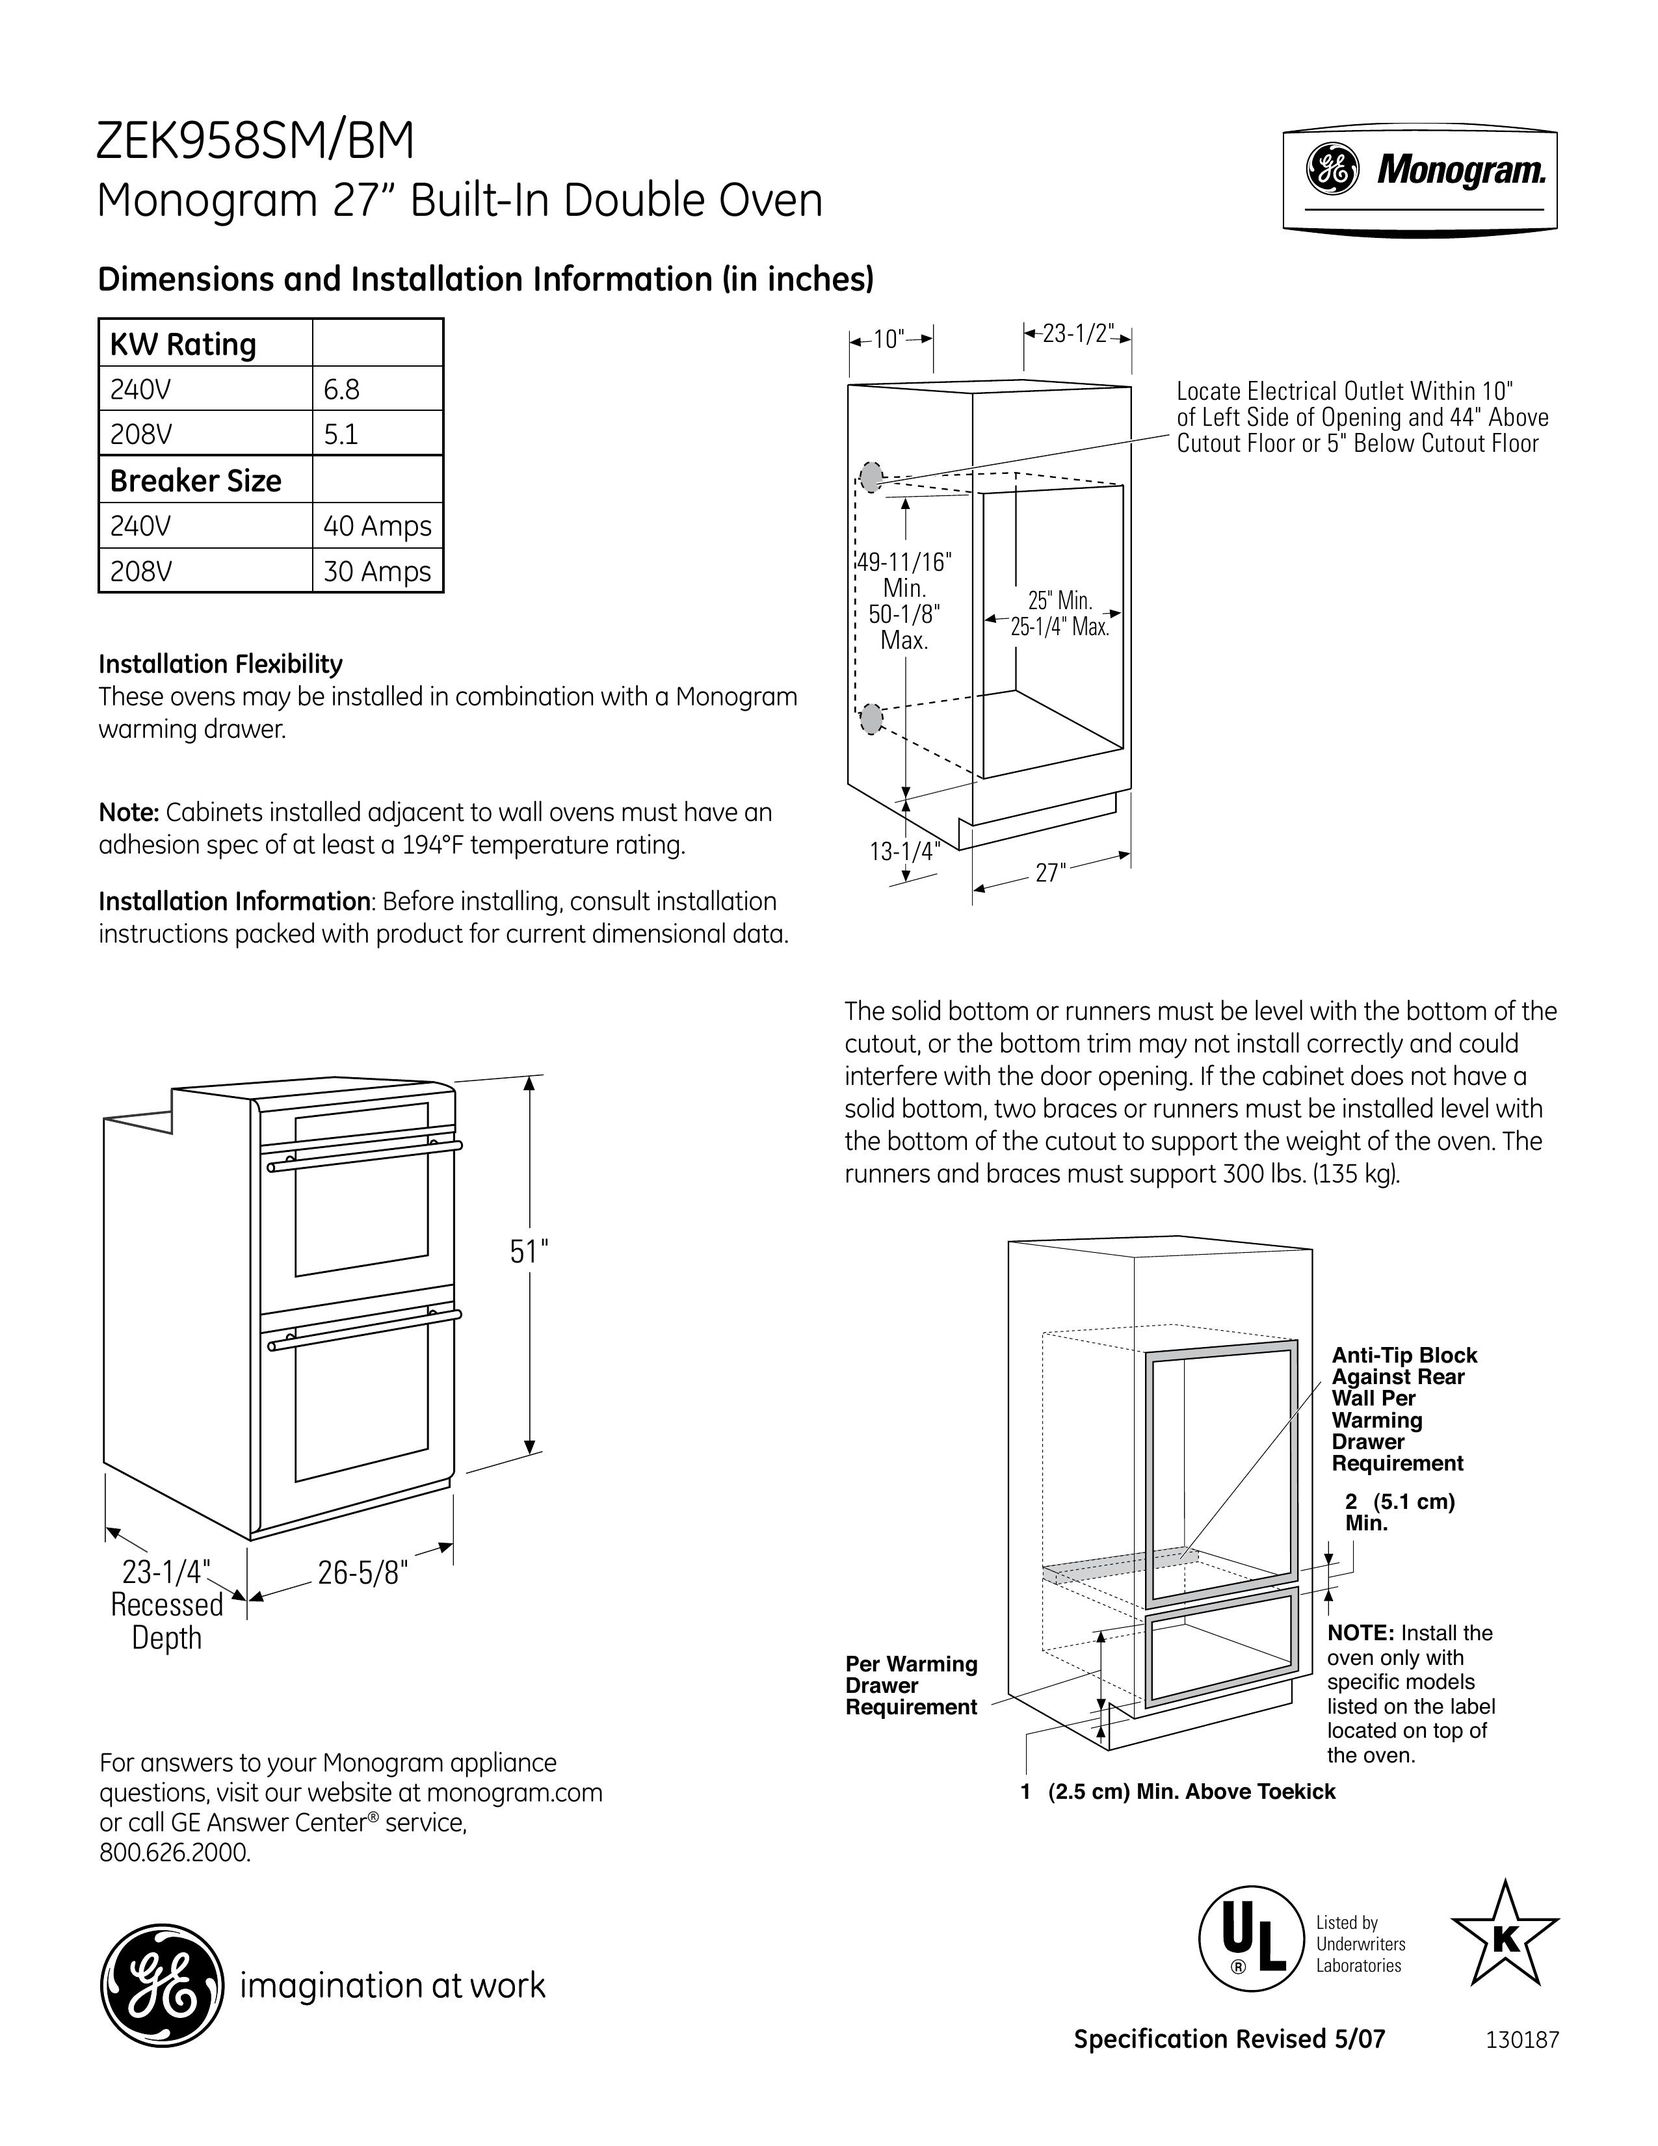 GE Monogram ZEK958SM/BM Double Oven User Manual